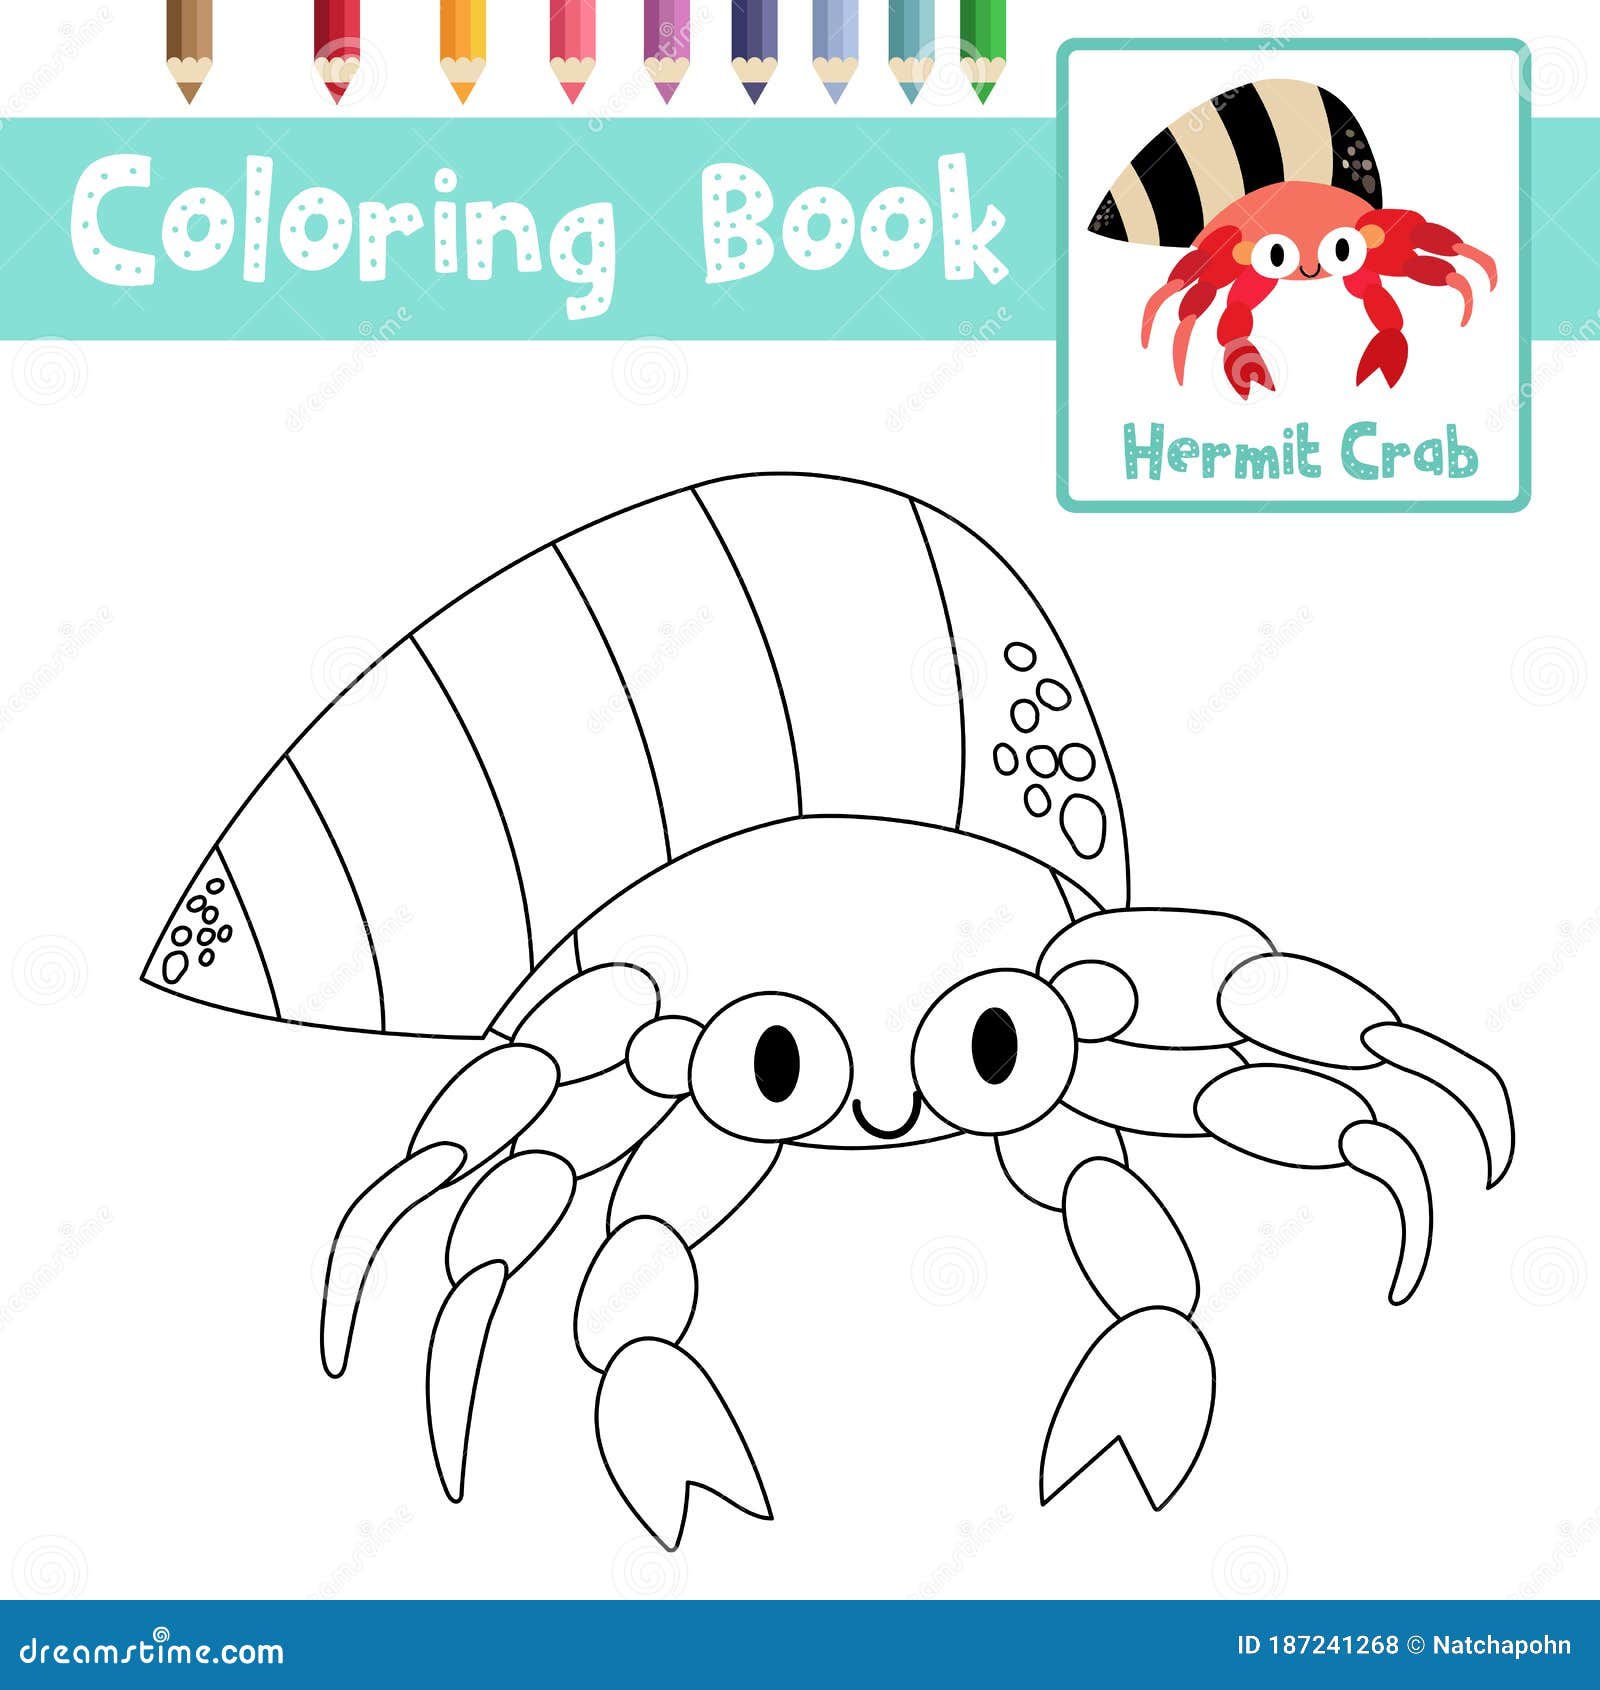 Coloring Page Hermit Crab Animal Cartoon Character Vector Illustration  Stock Vector - Illustration of character, kindergarten: 187241268